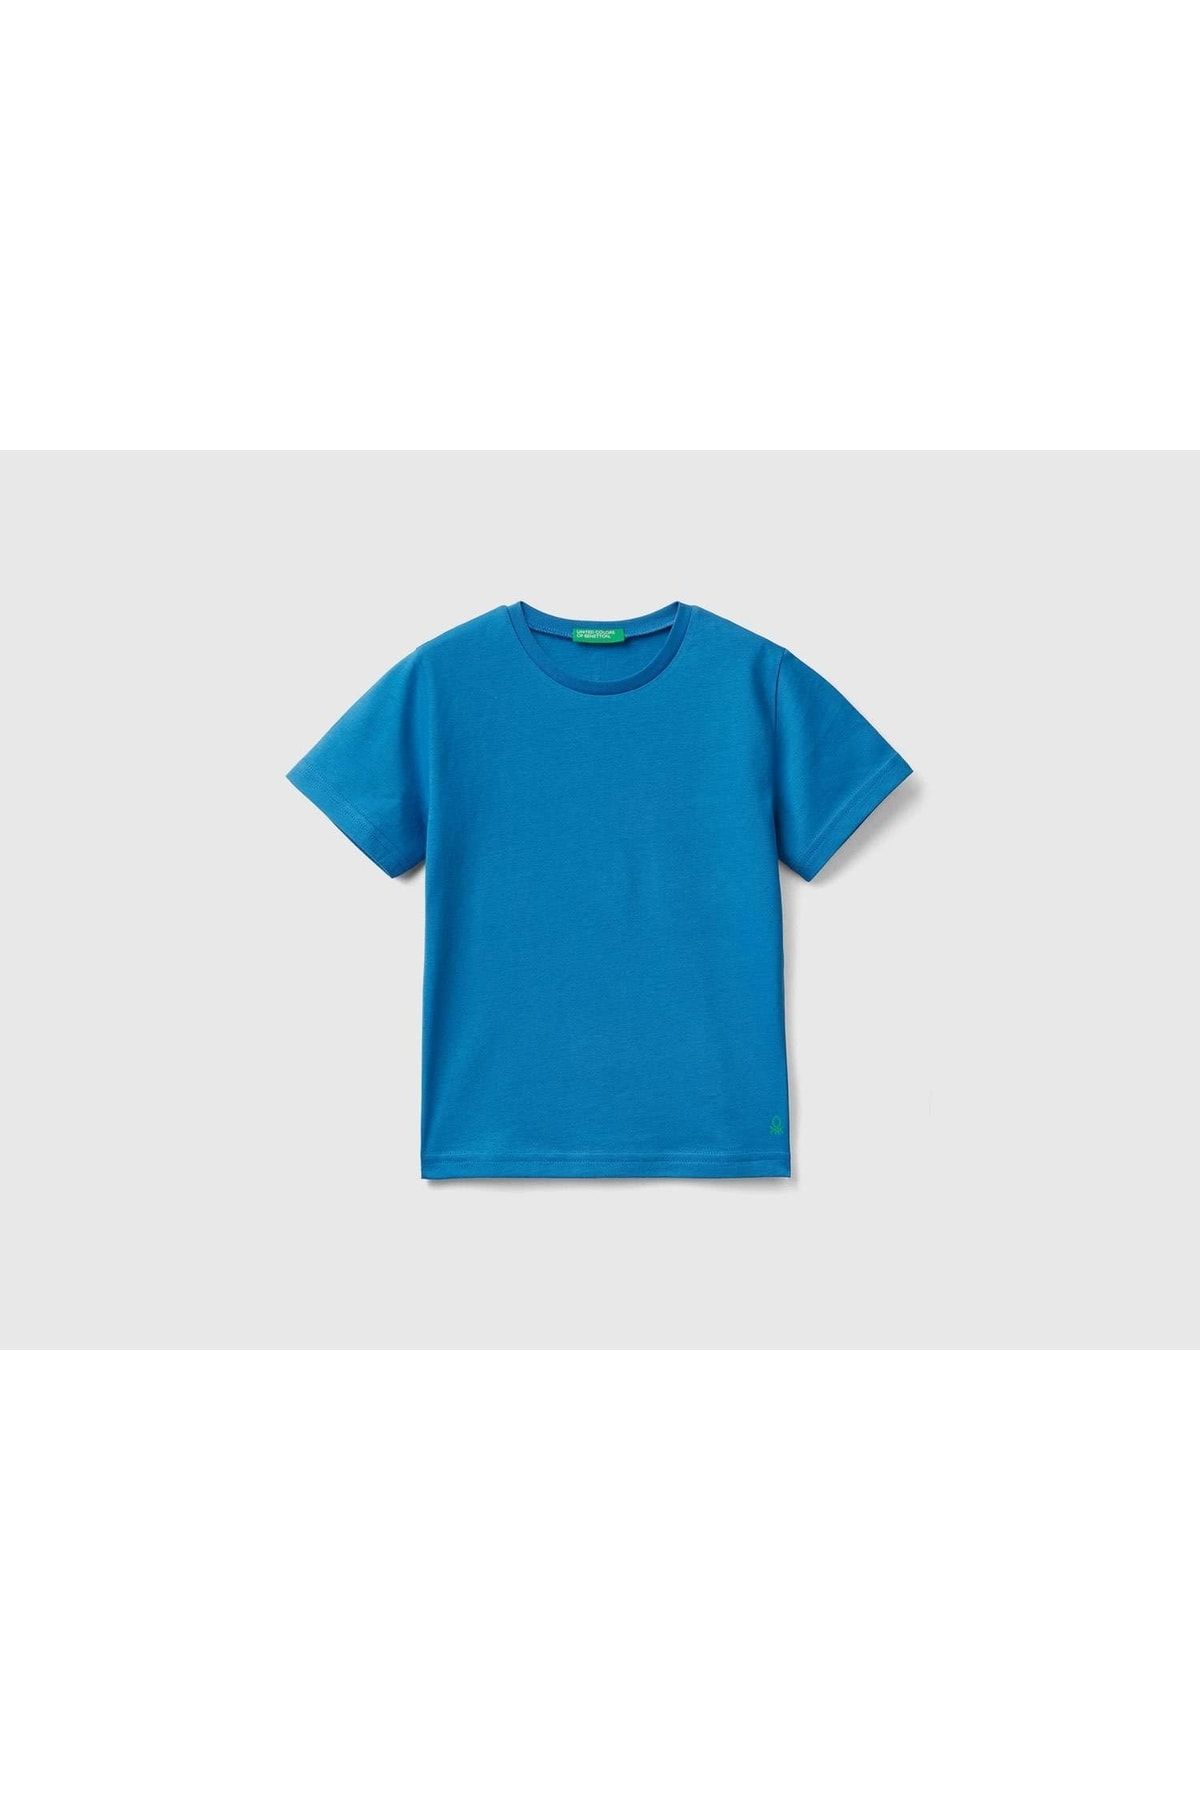 United Colors of Benetton Erkek Çocuk Mavi Benetton Logo Basic T-shirt